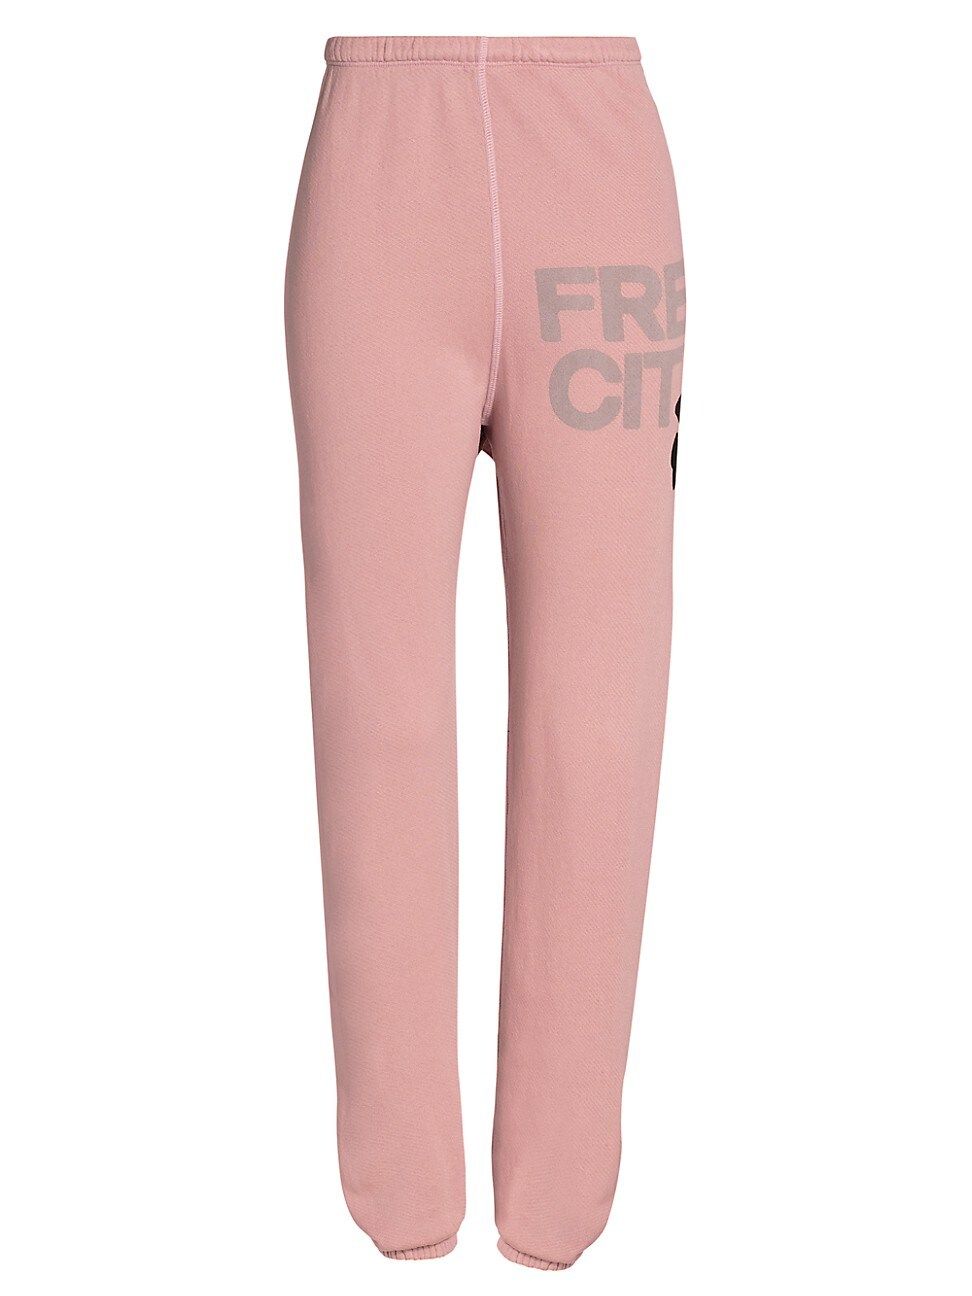 Free City Women's Superluff Lux Standard-Fit Sweatpants - Ballerina Pink - Size Small | Saks Fifth Avenue